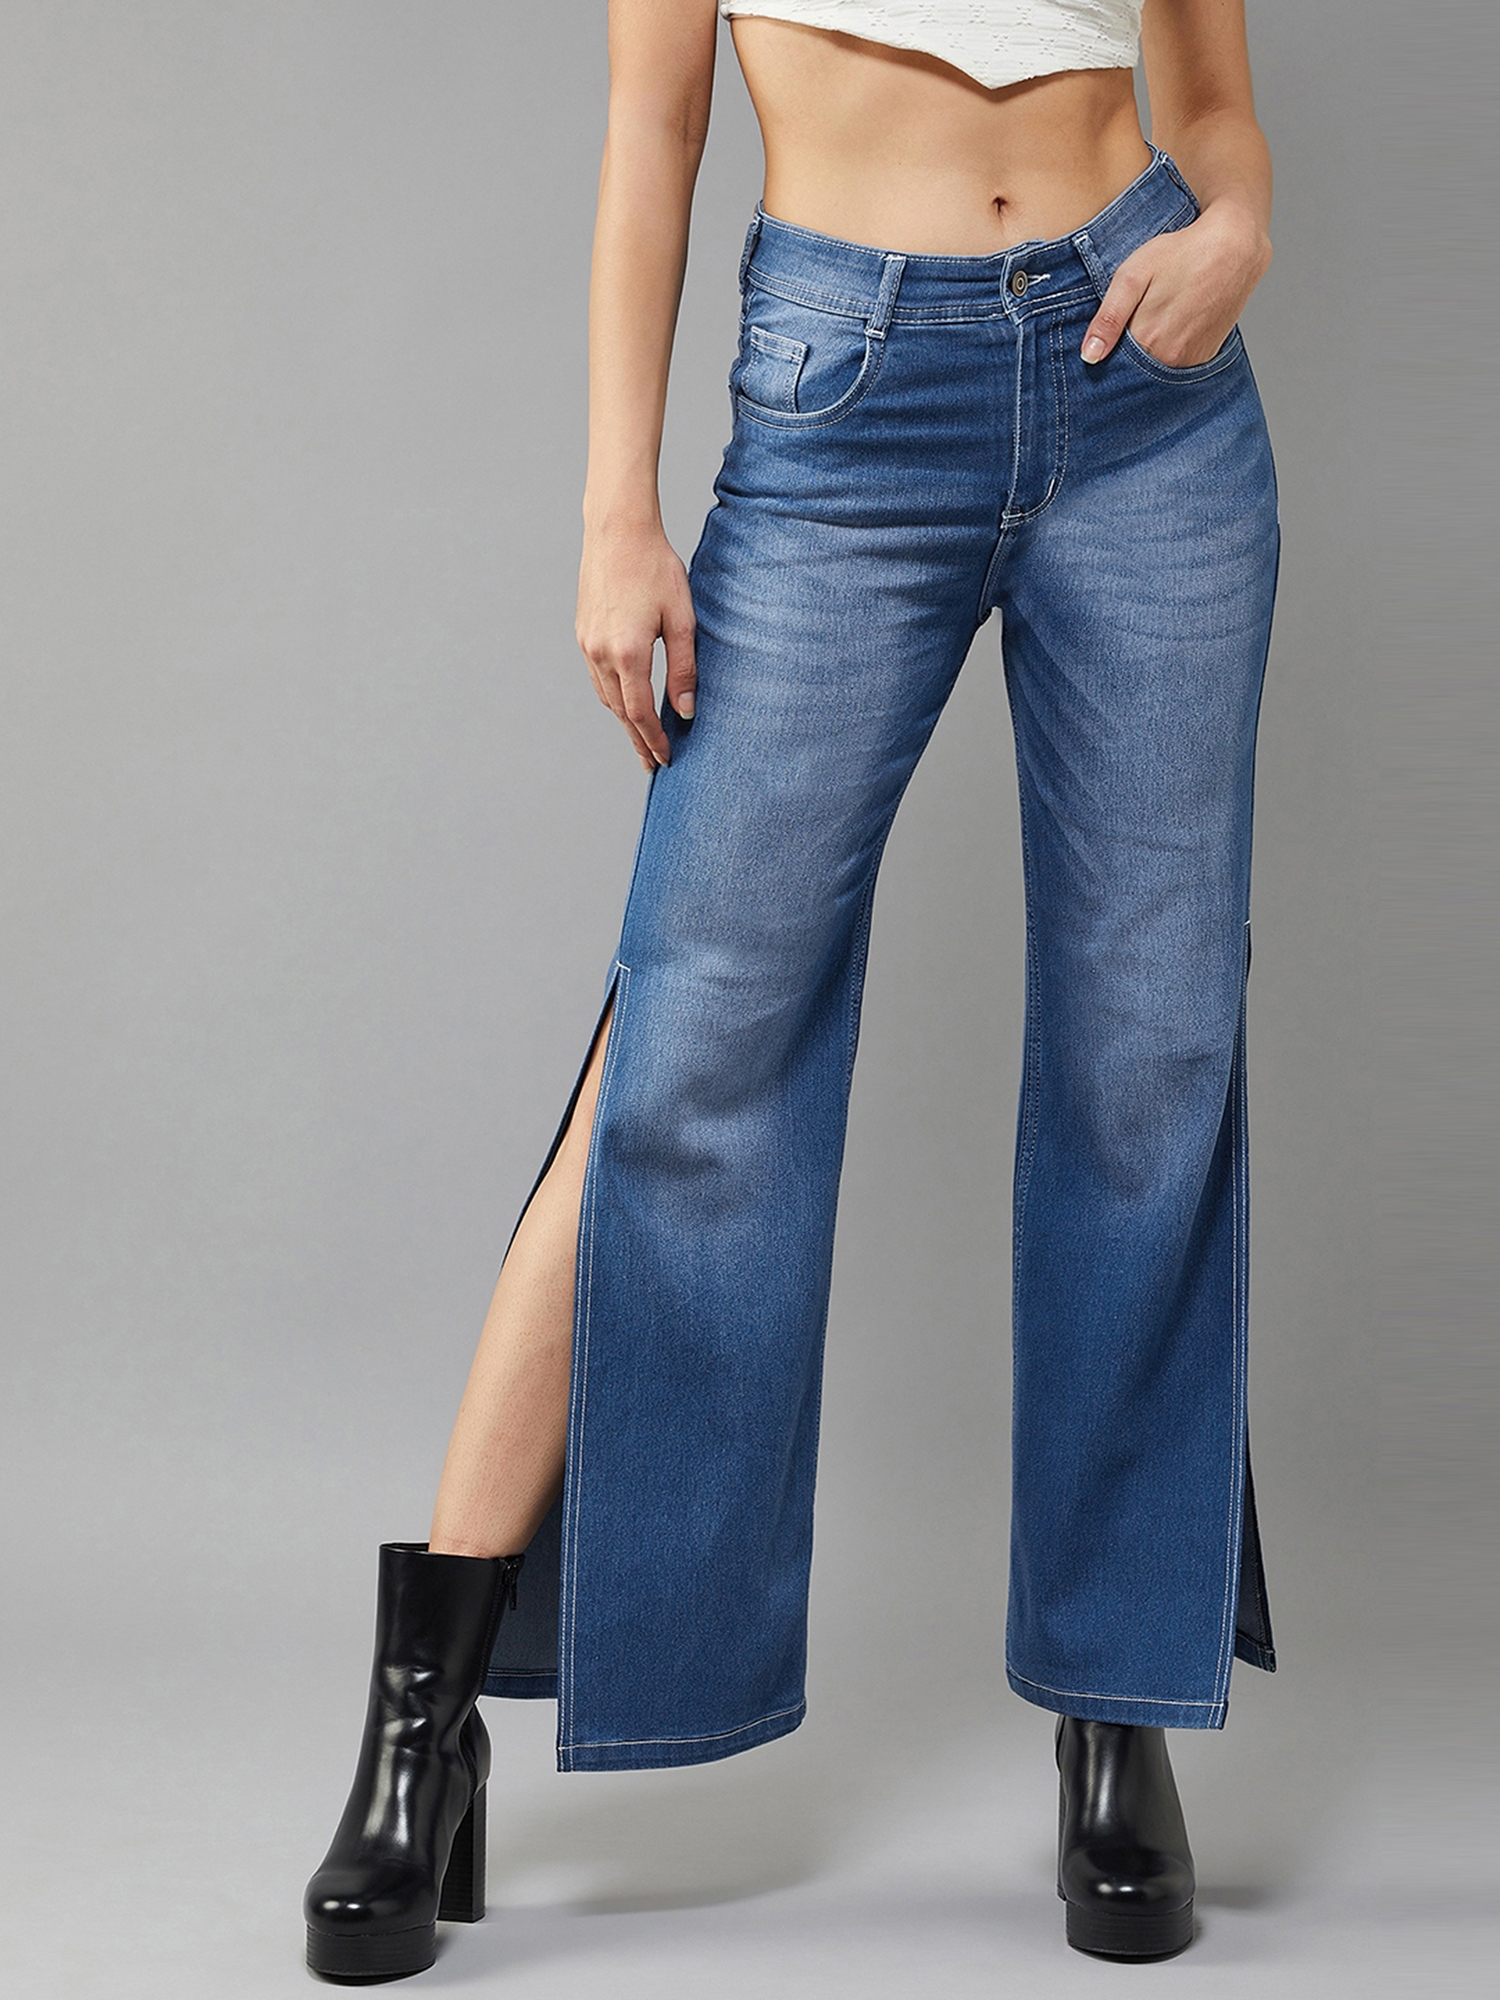 Buy Blue Mid Rise Girlfriend Fit Jeans for Women Online